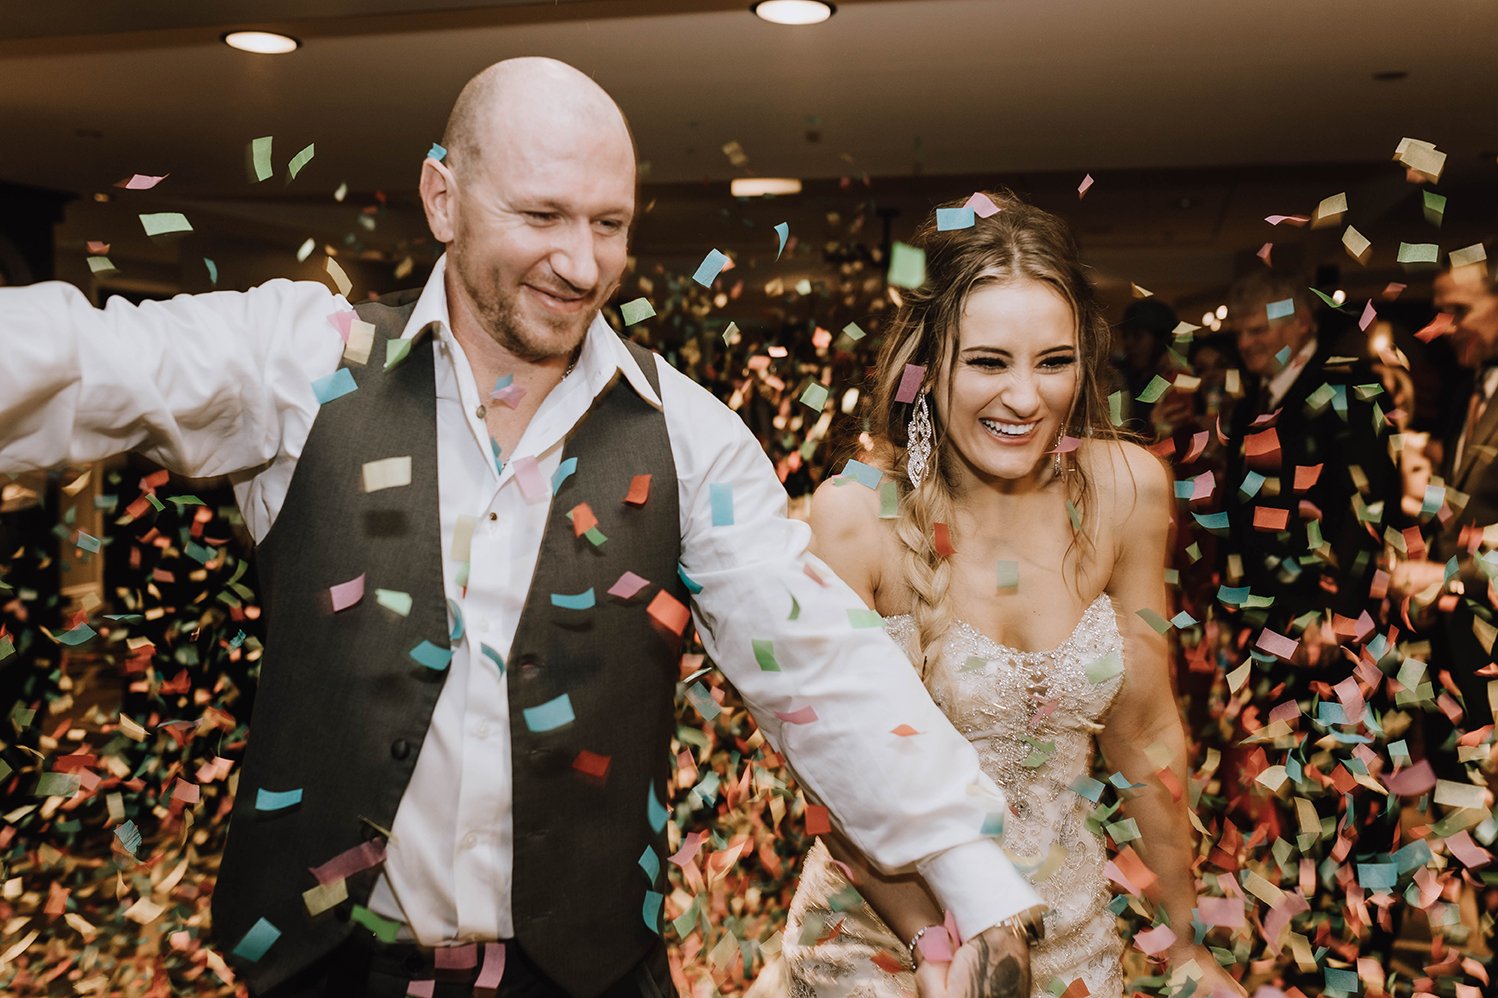 houston, hotel wedding, confetti, couple exit